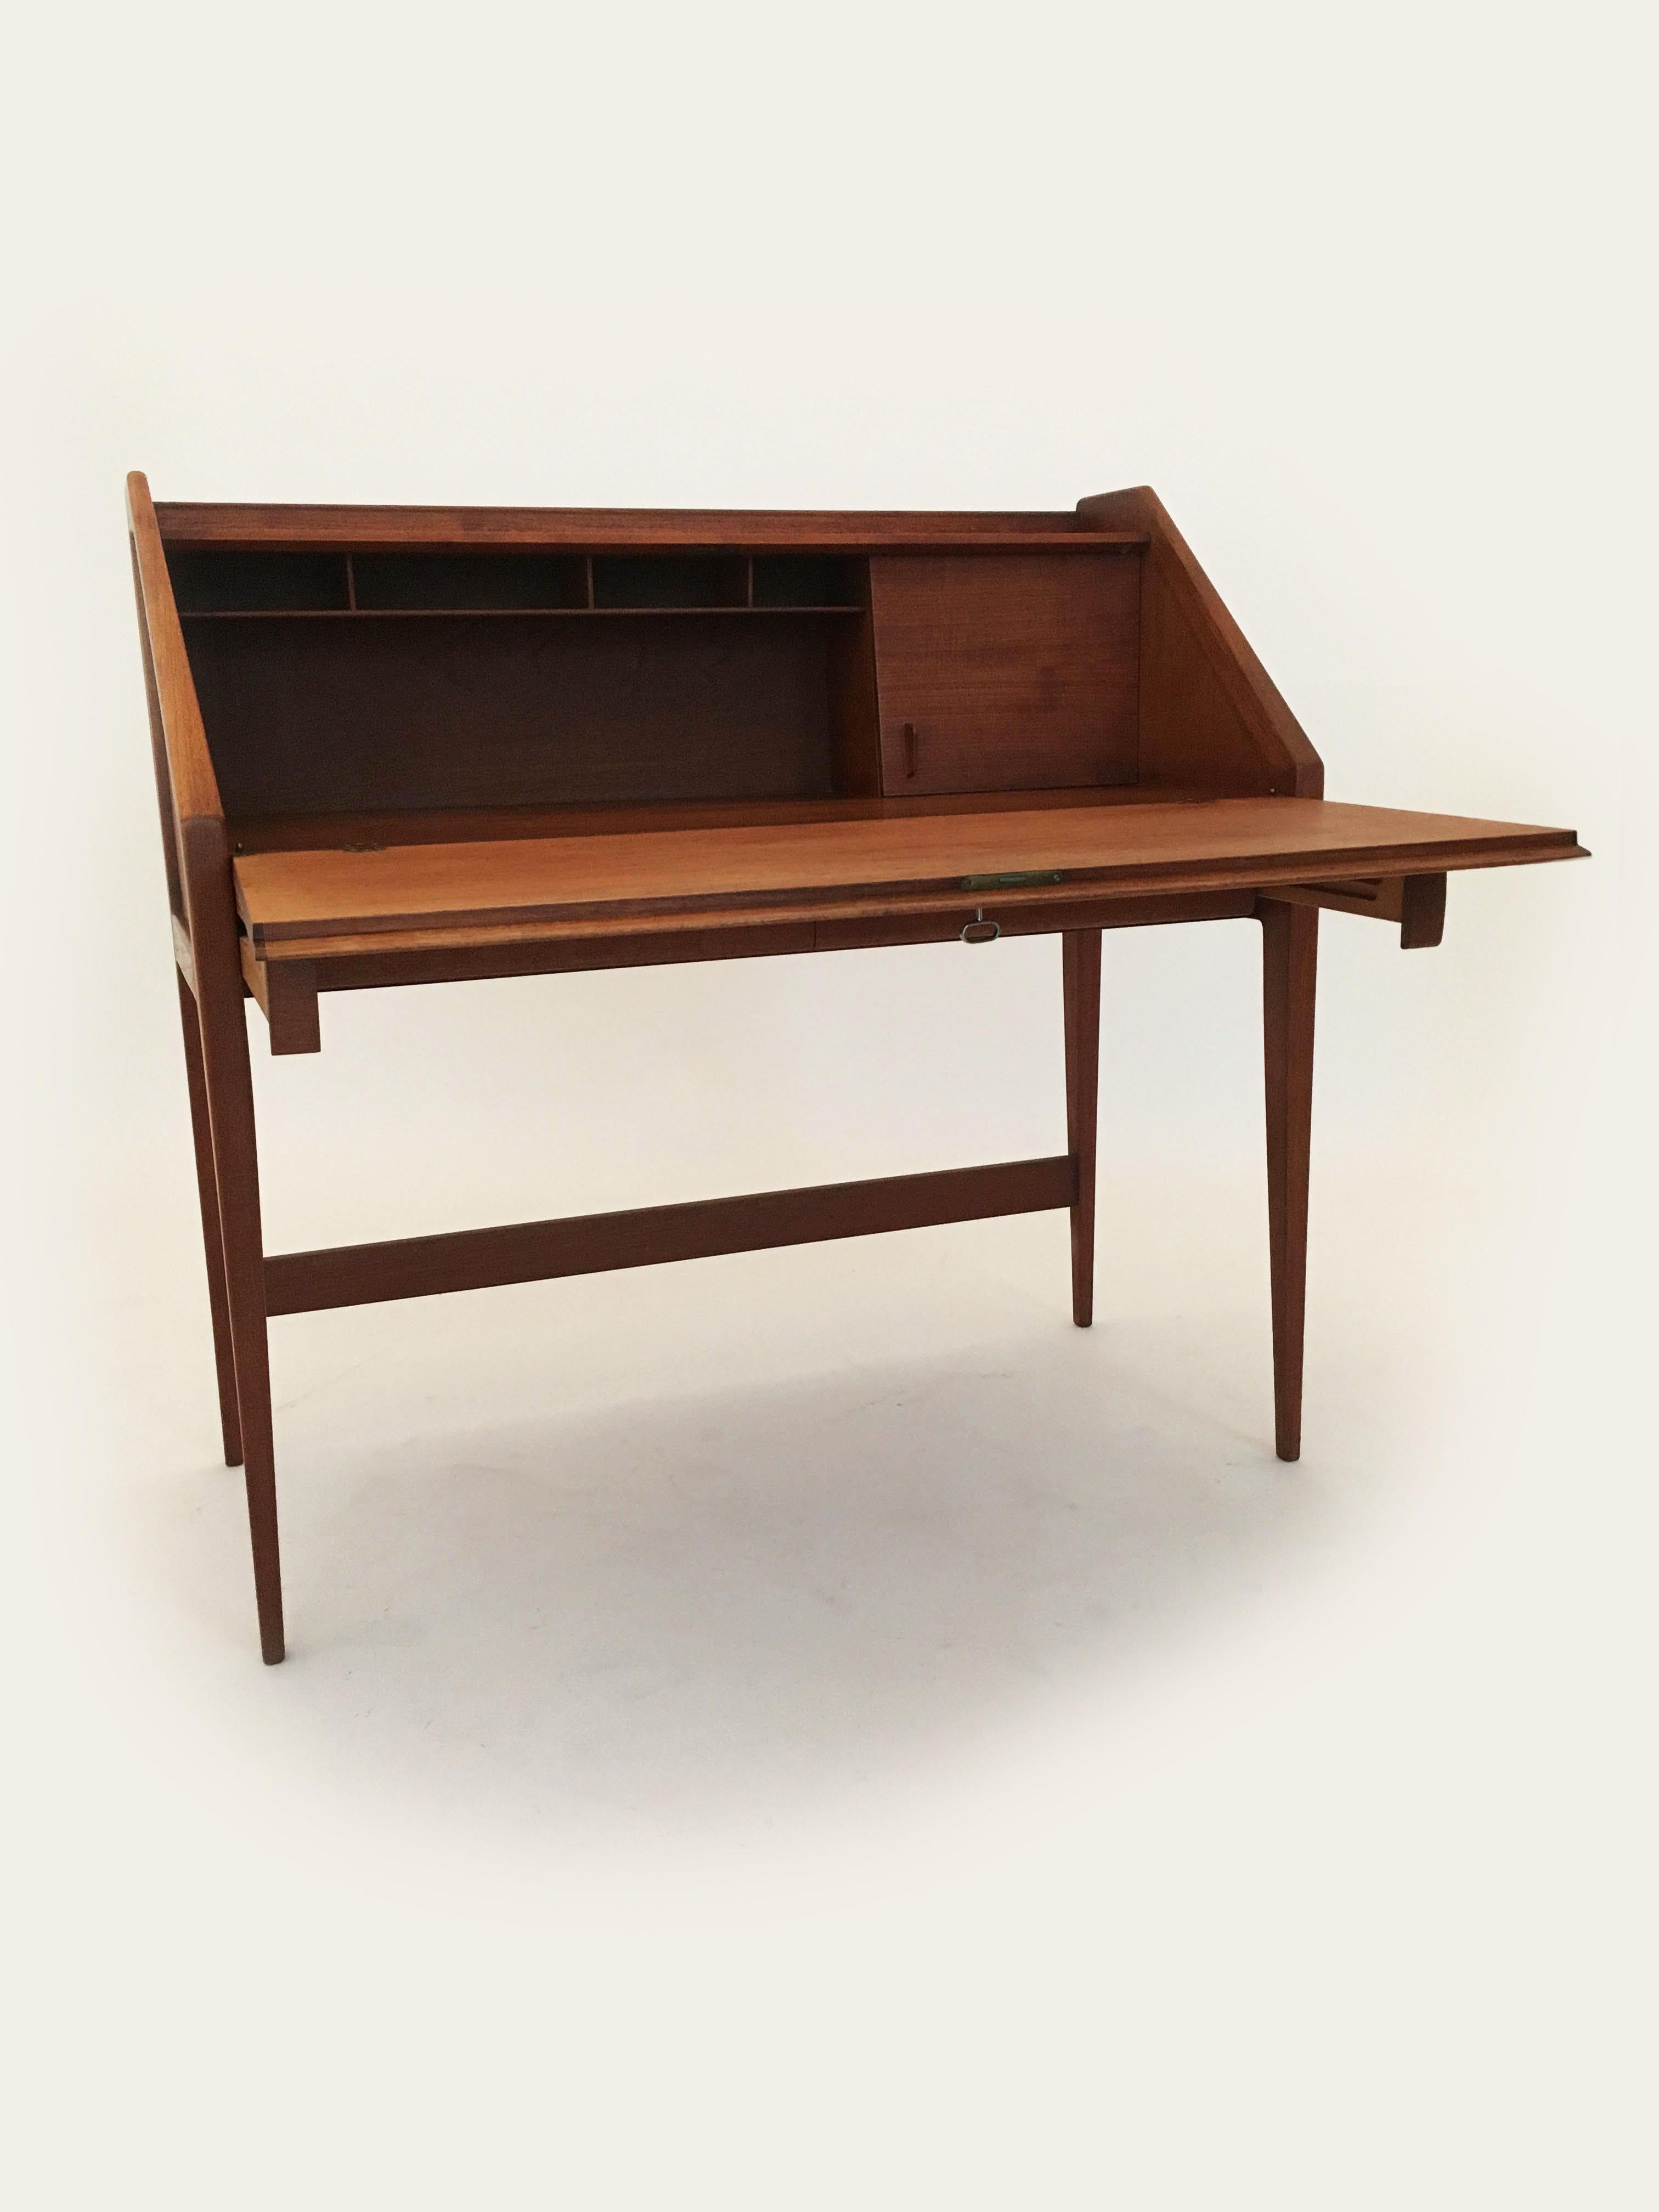 Mid-20th Century Mid-Century Modern Teak Desk, Writing Table by Walter Wirz for Wilhelm Renz For Sale